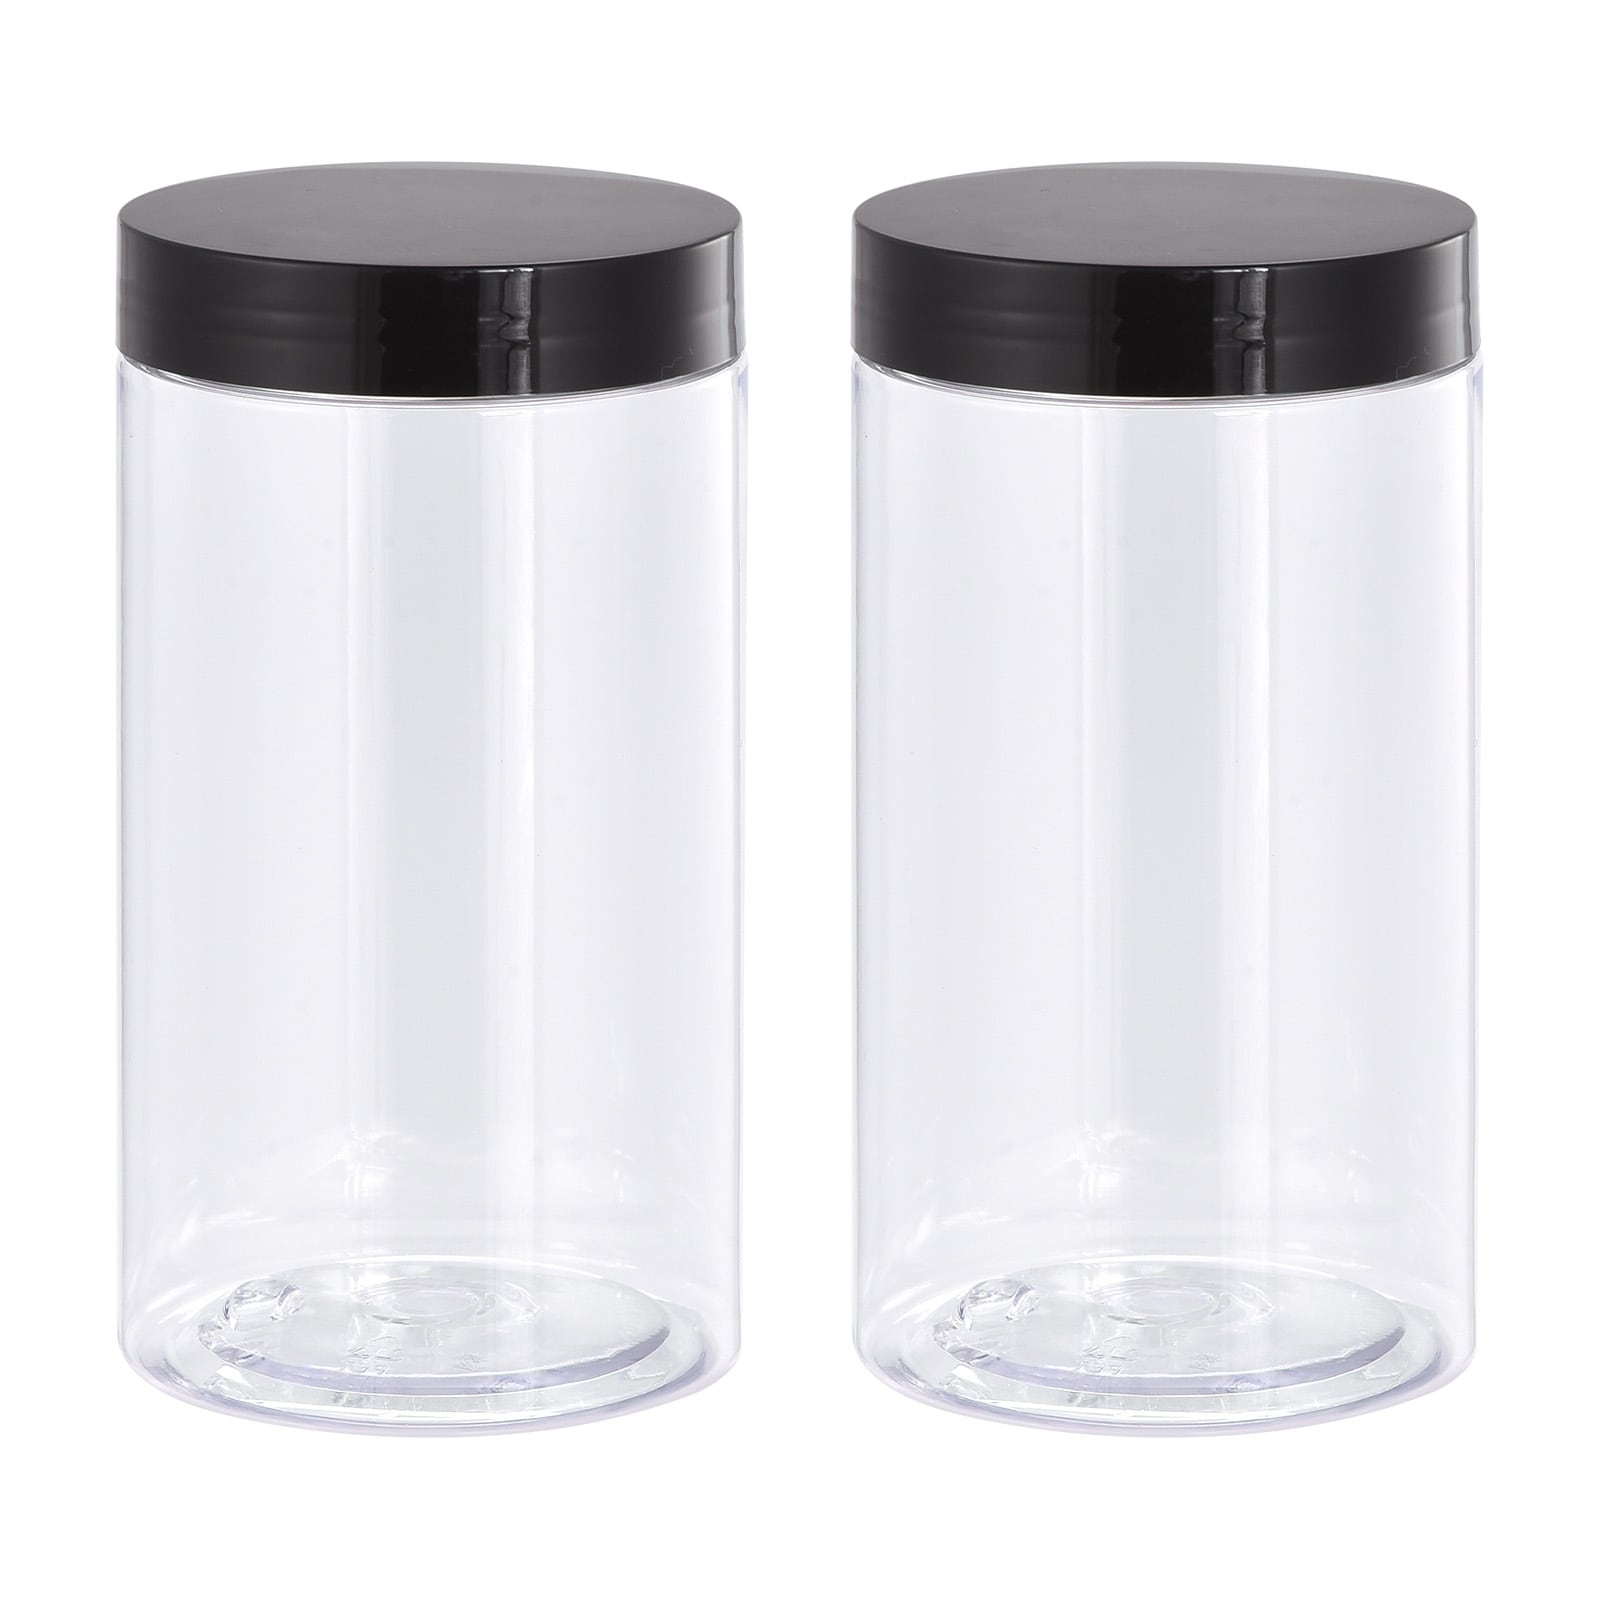 We R Memory Keepers Glass Jars 4/Pkg - Large